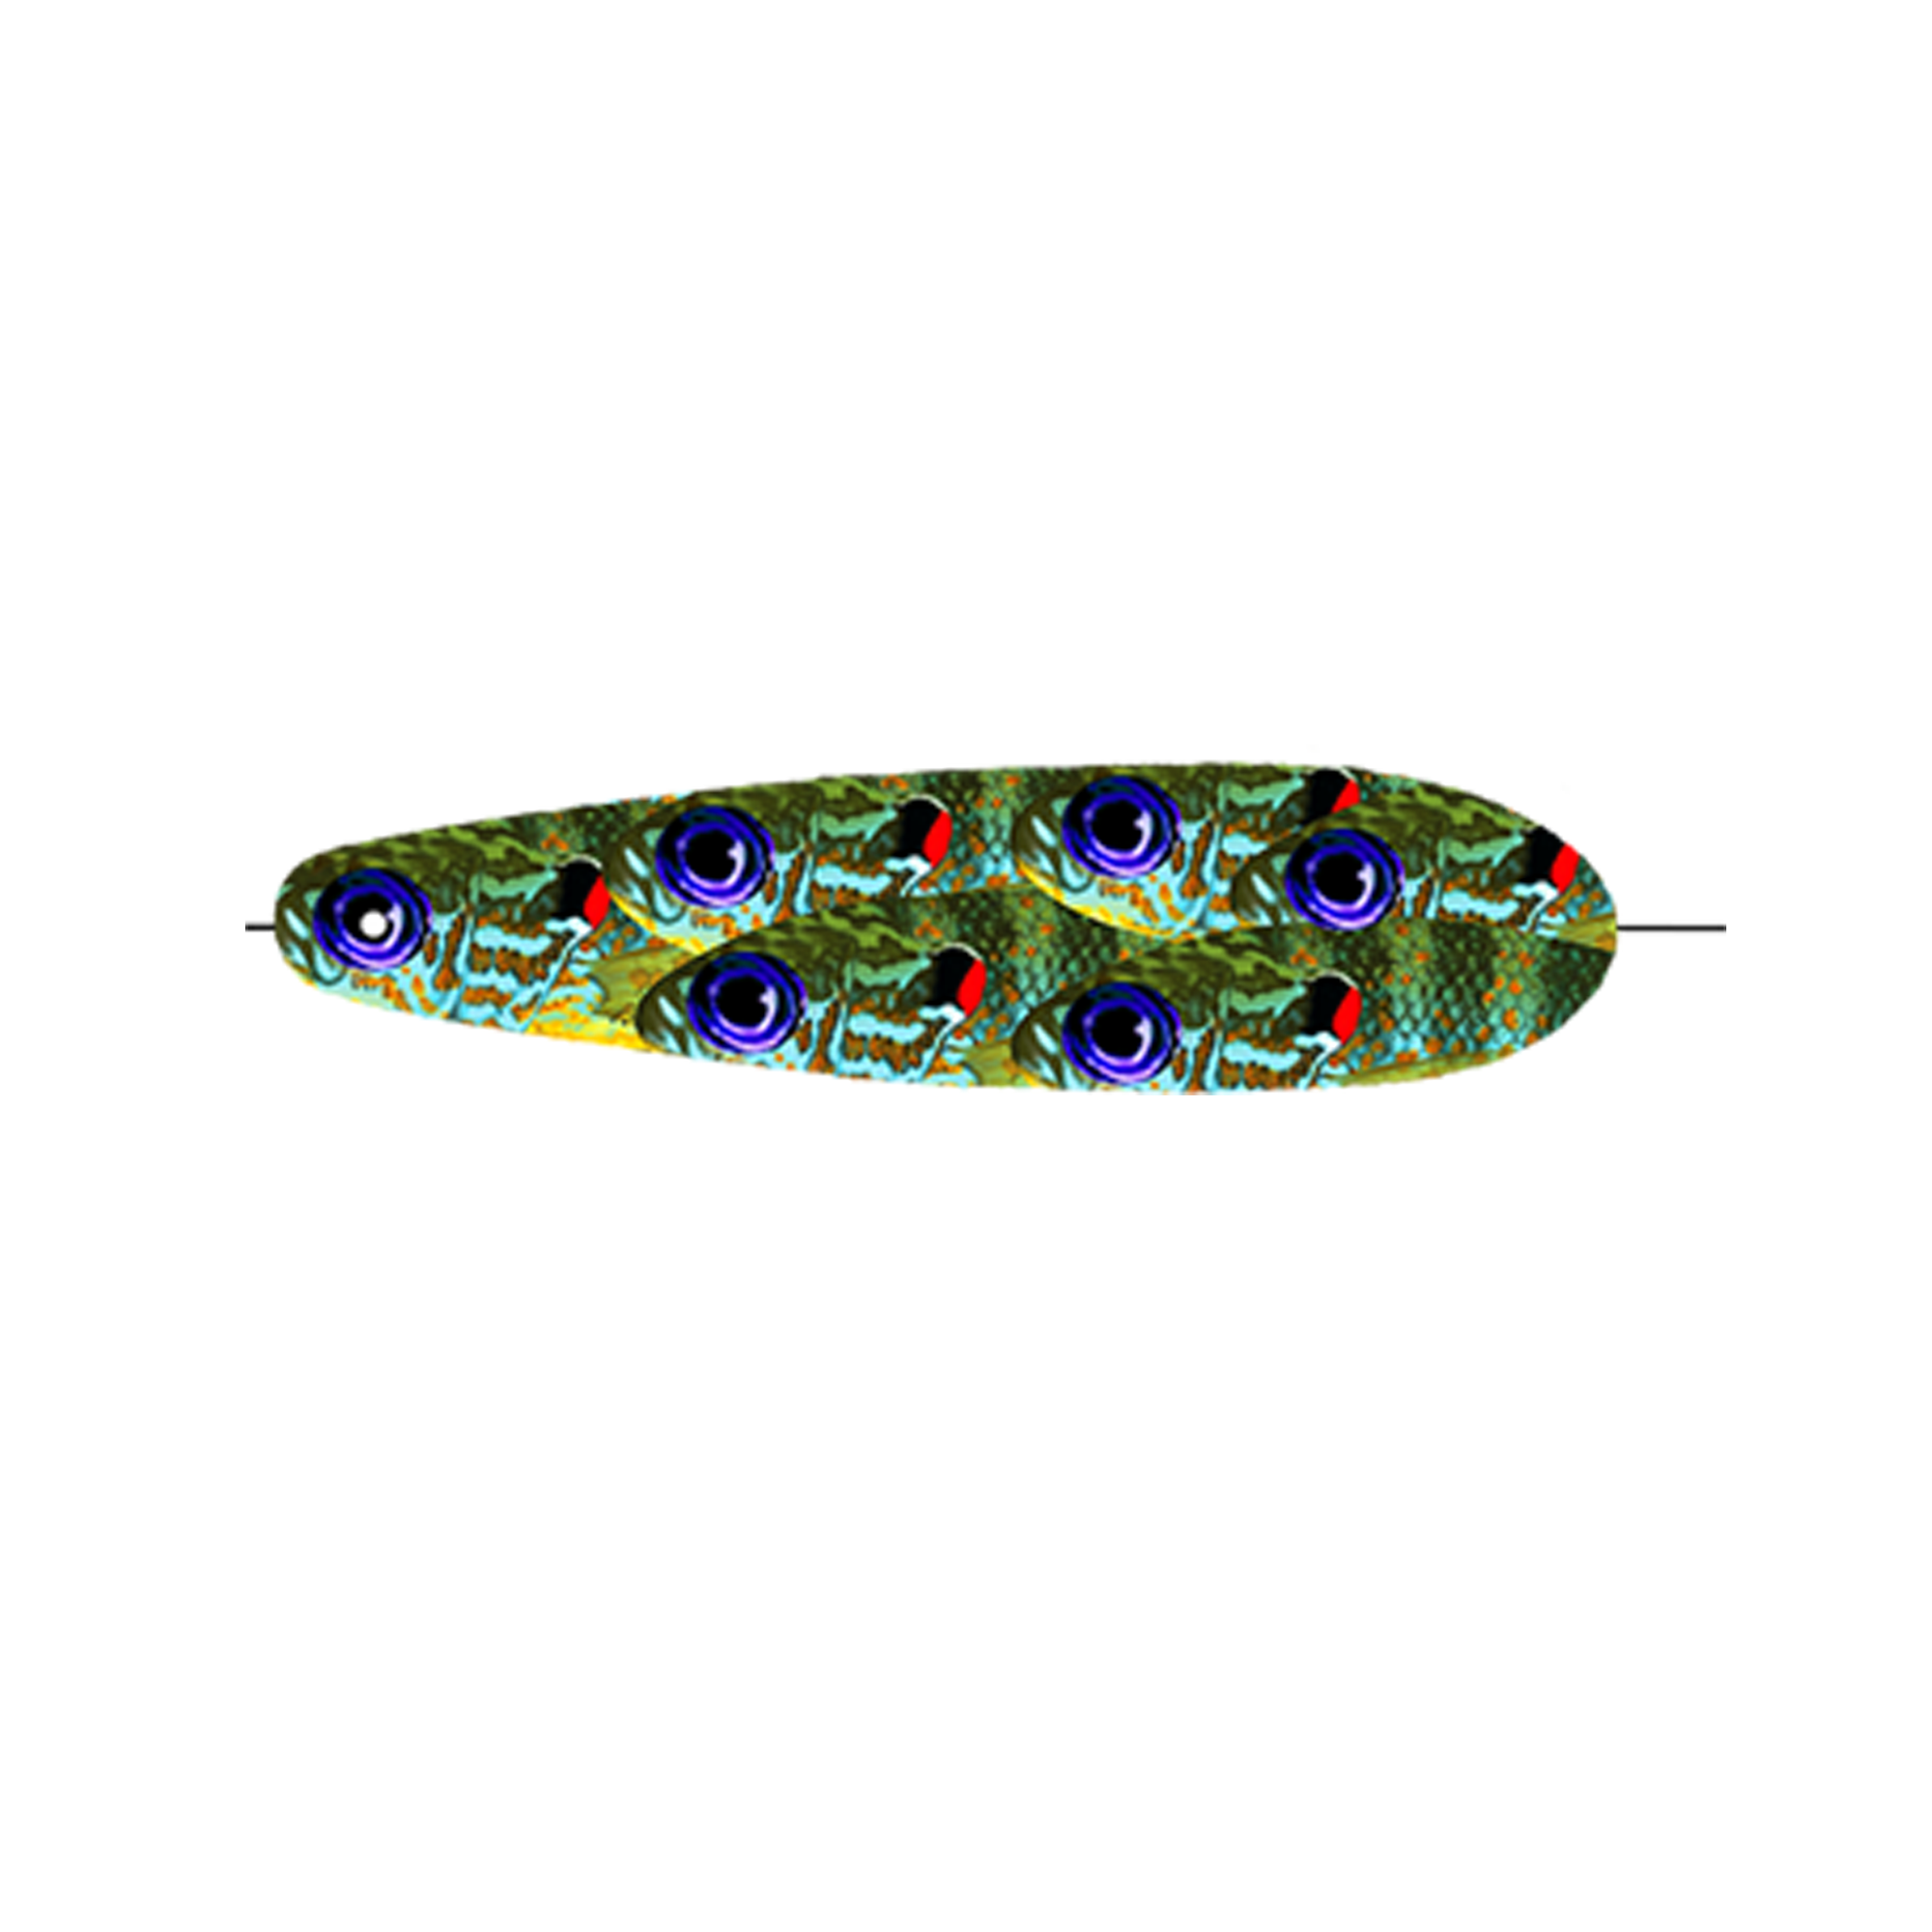 Sunfish 3 Flipper Tail Shad Lipless Crankbait - Reno Bait Company